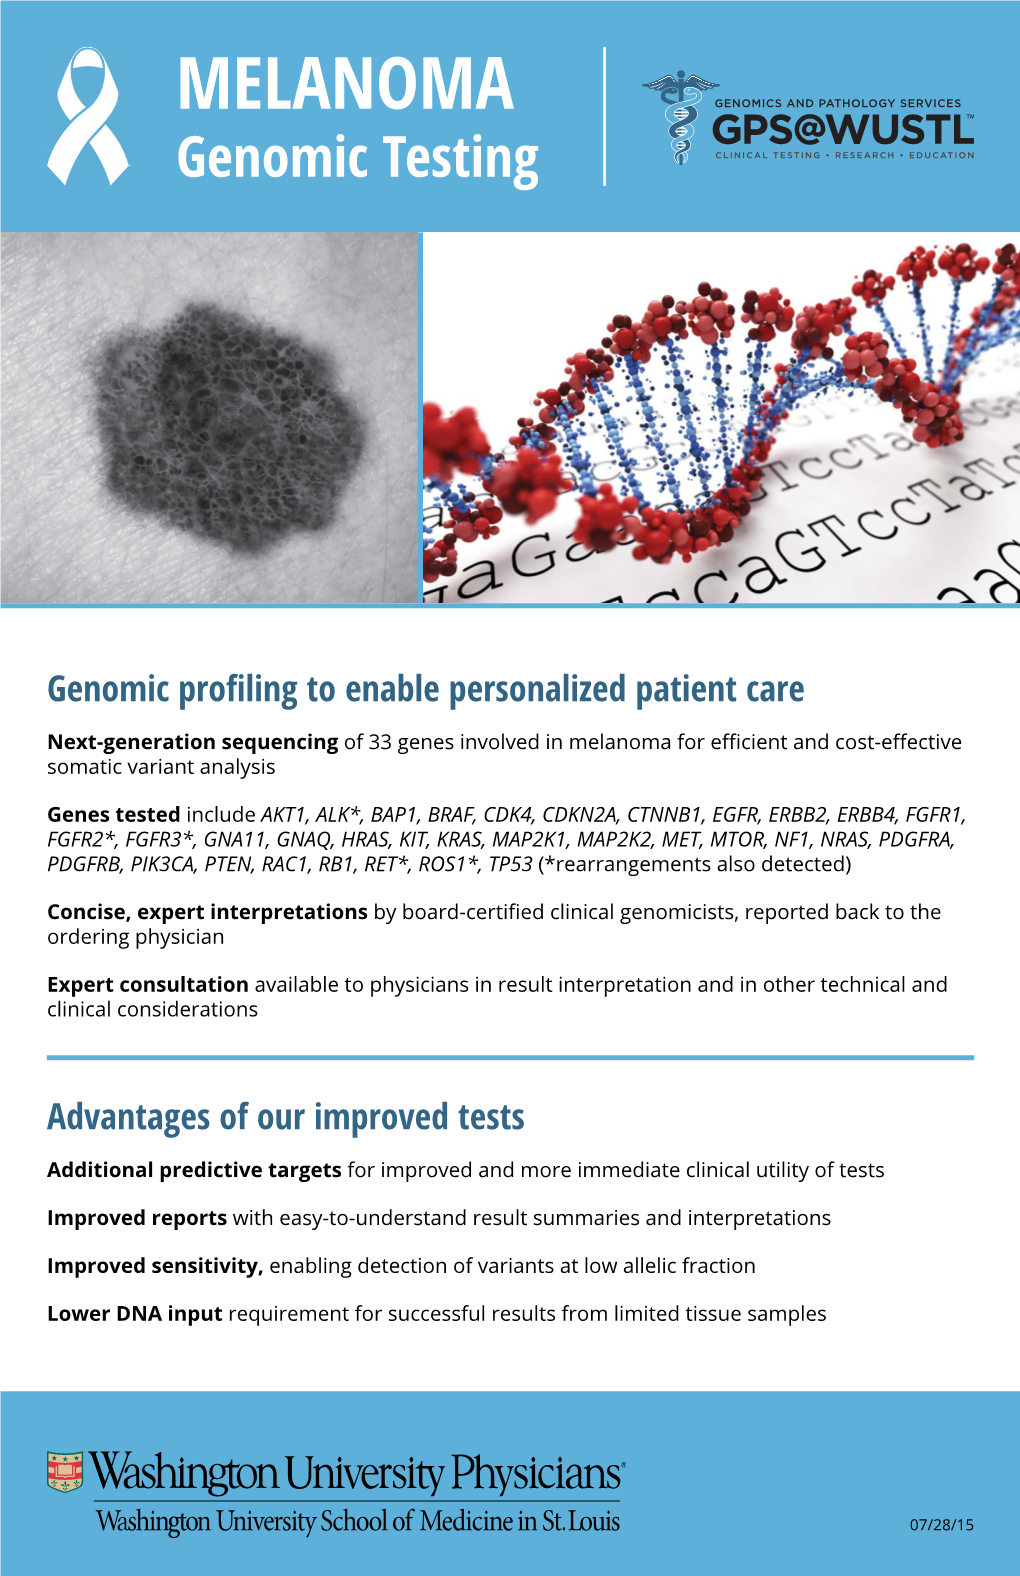 MELANOMA Genomic Testing